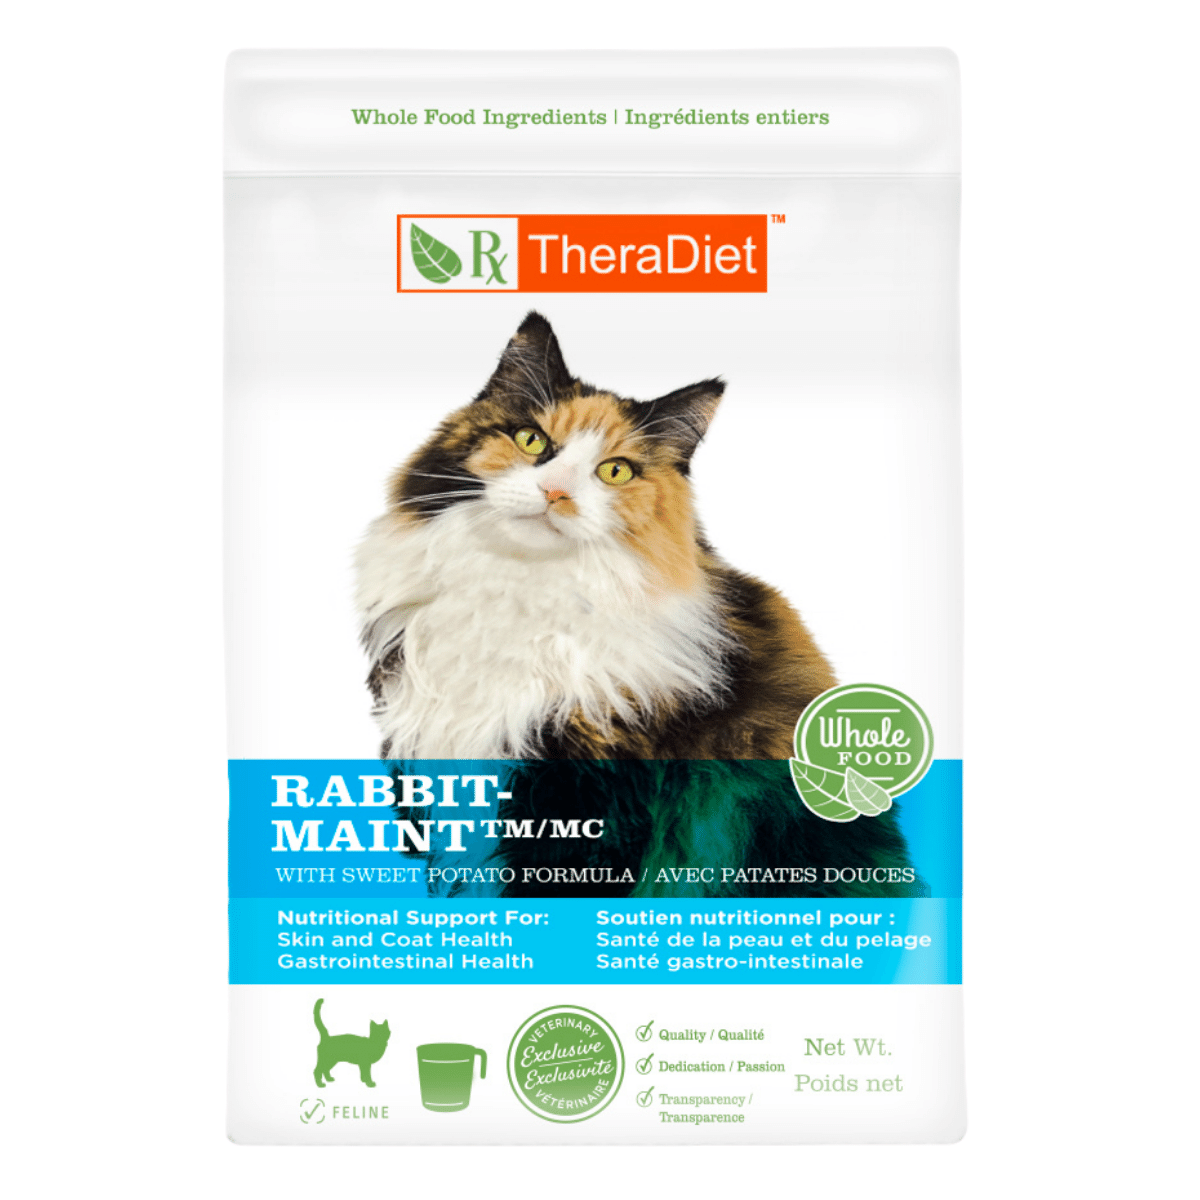 Rabbit-MAINT Dry Cat Food